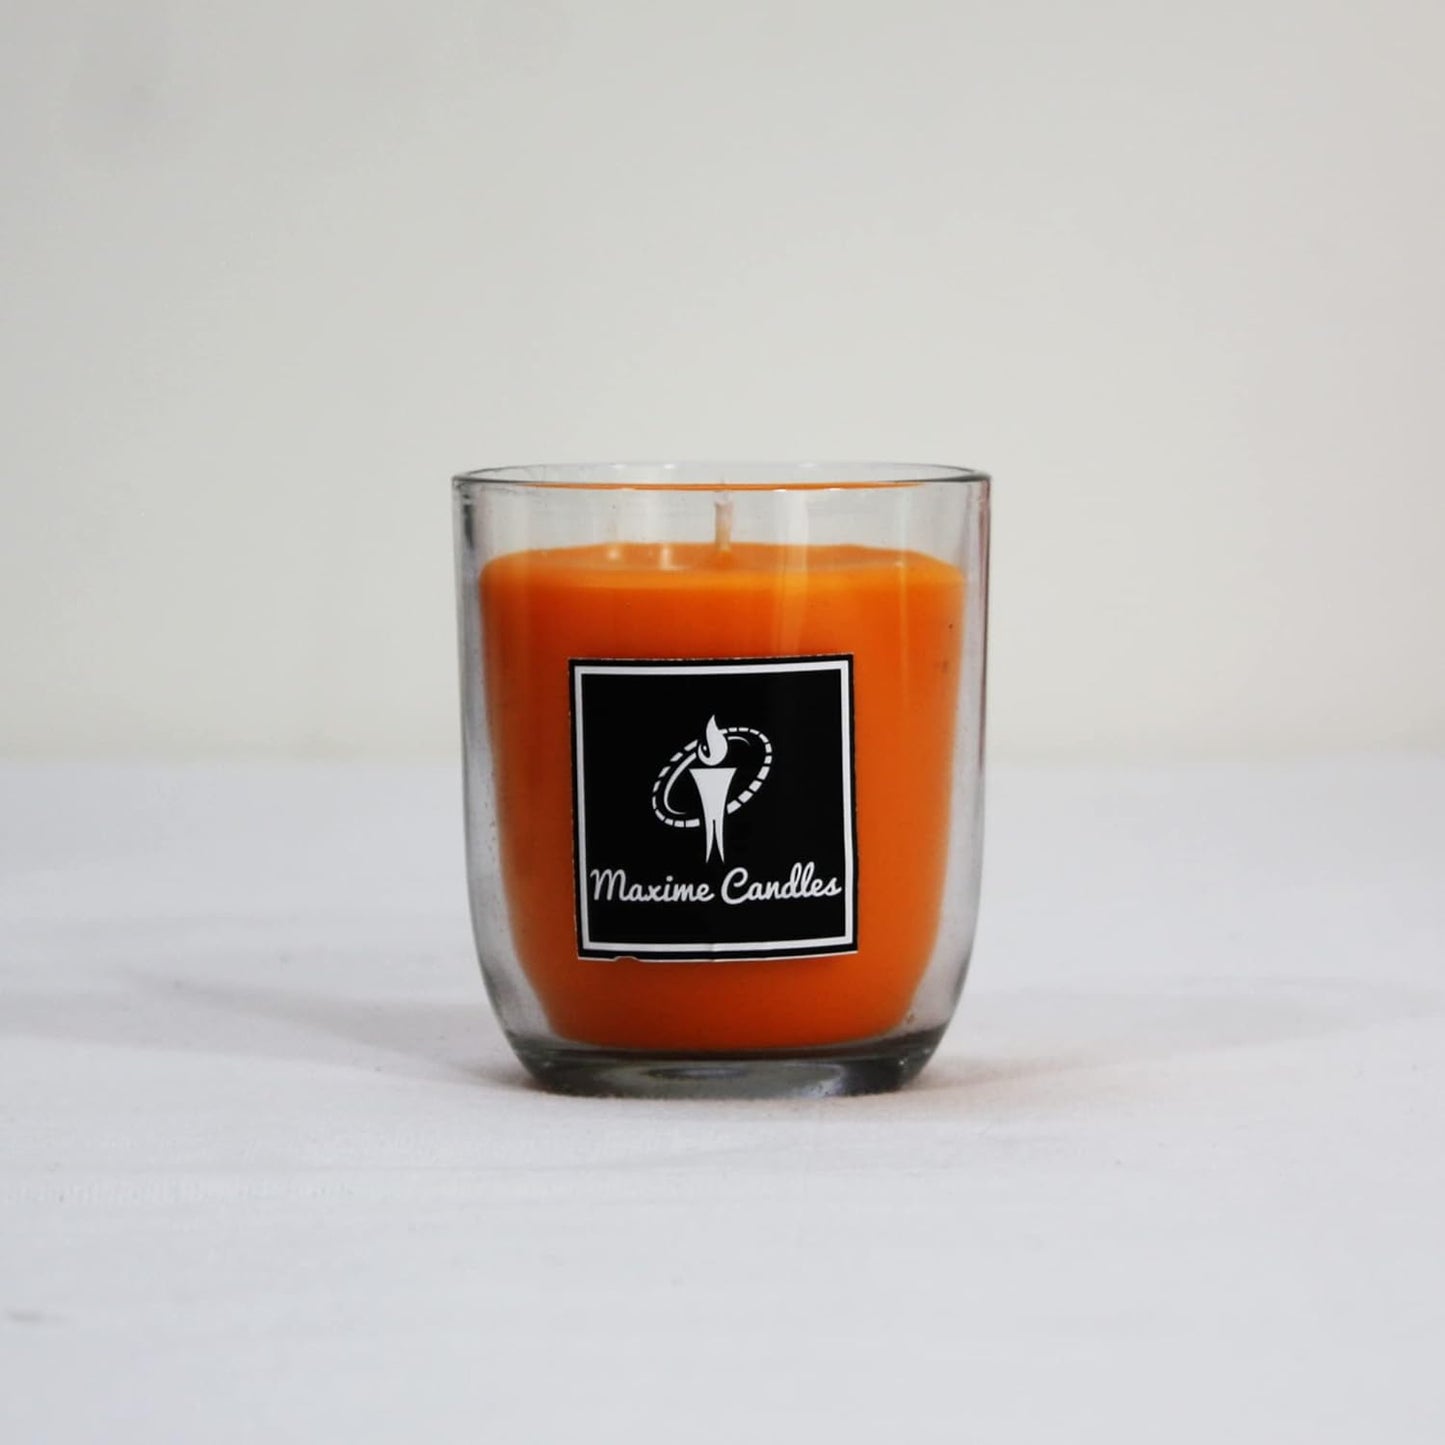 Mandarin Fragranced U Shaped Glass Jar Scented Candle